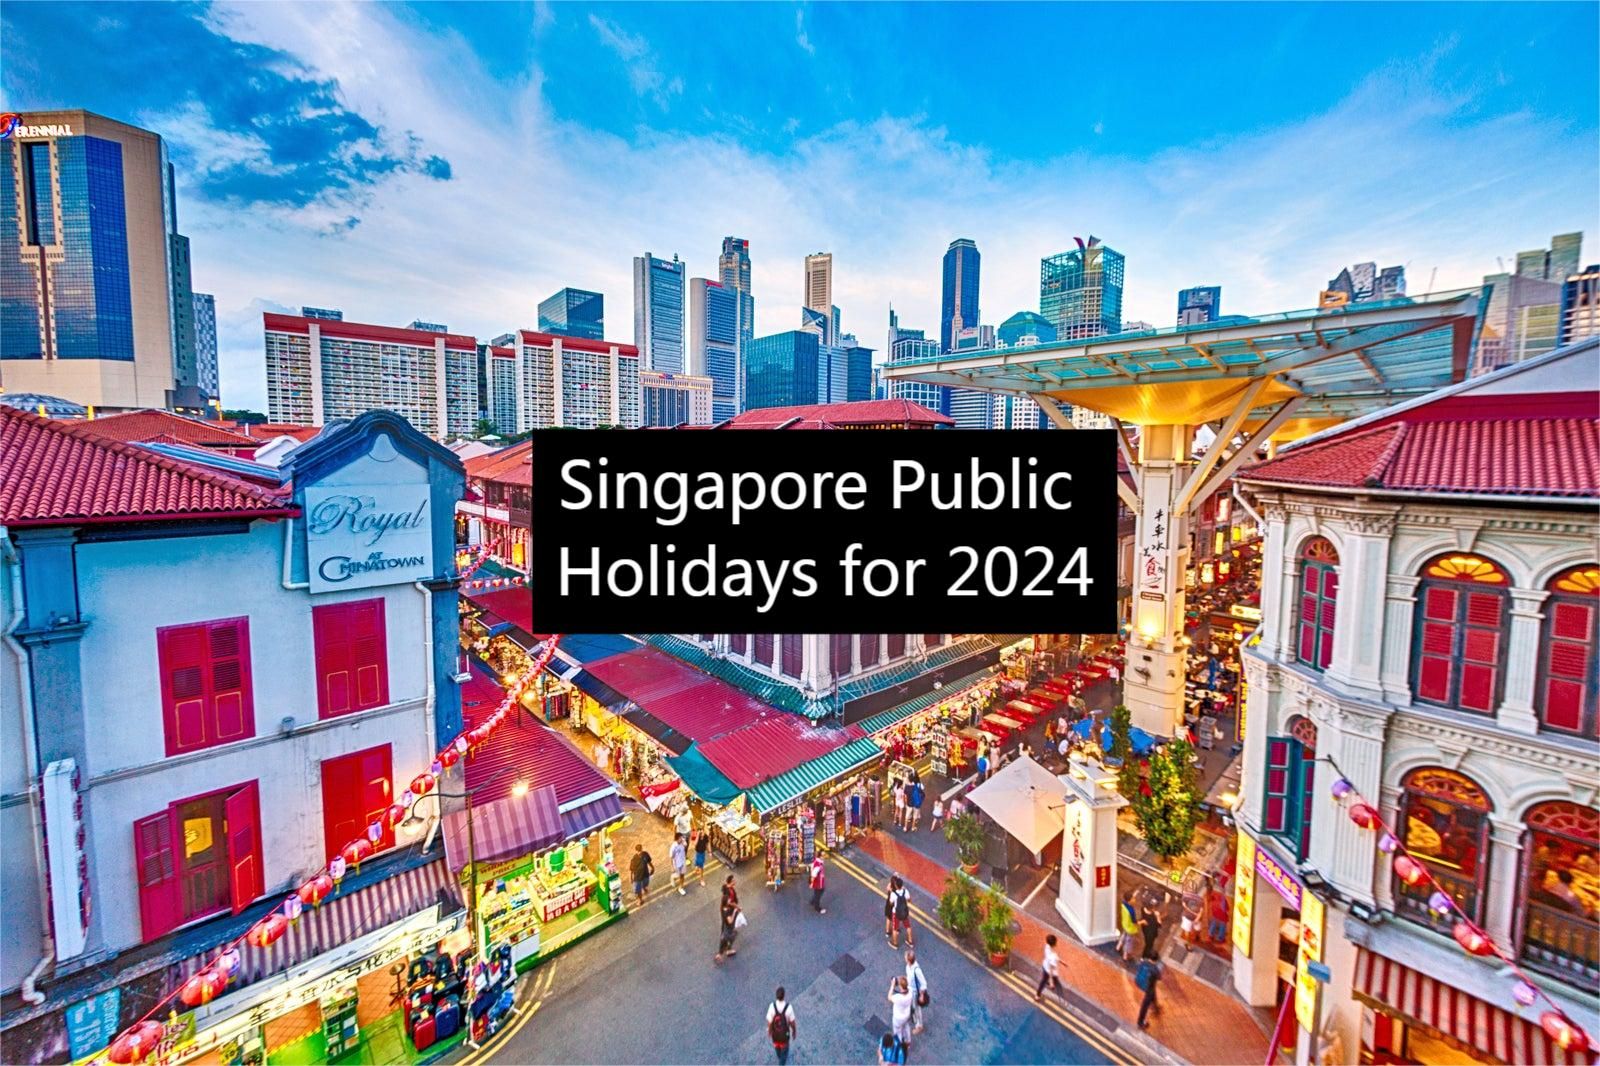 Singapore Public Holidays for 2024